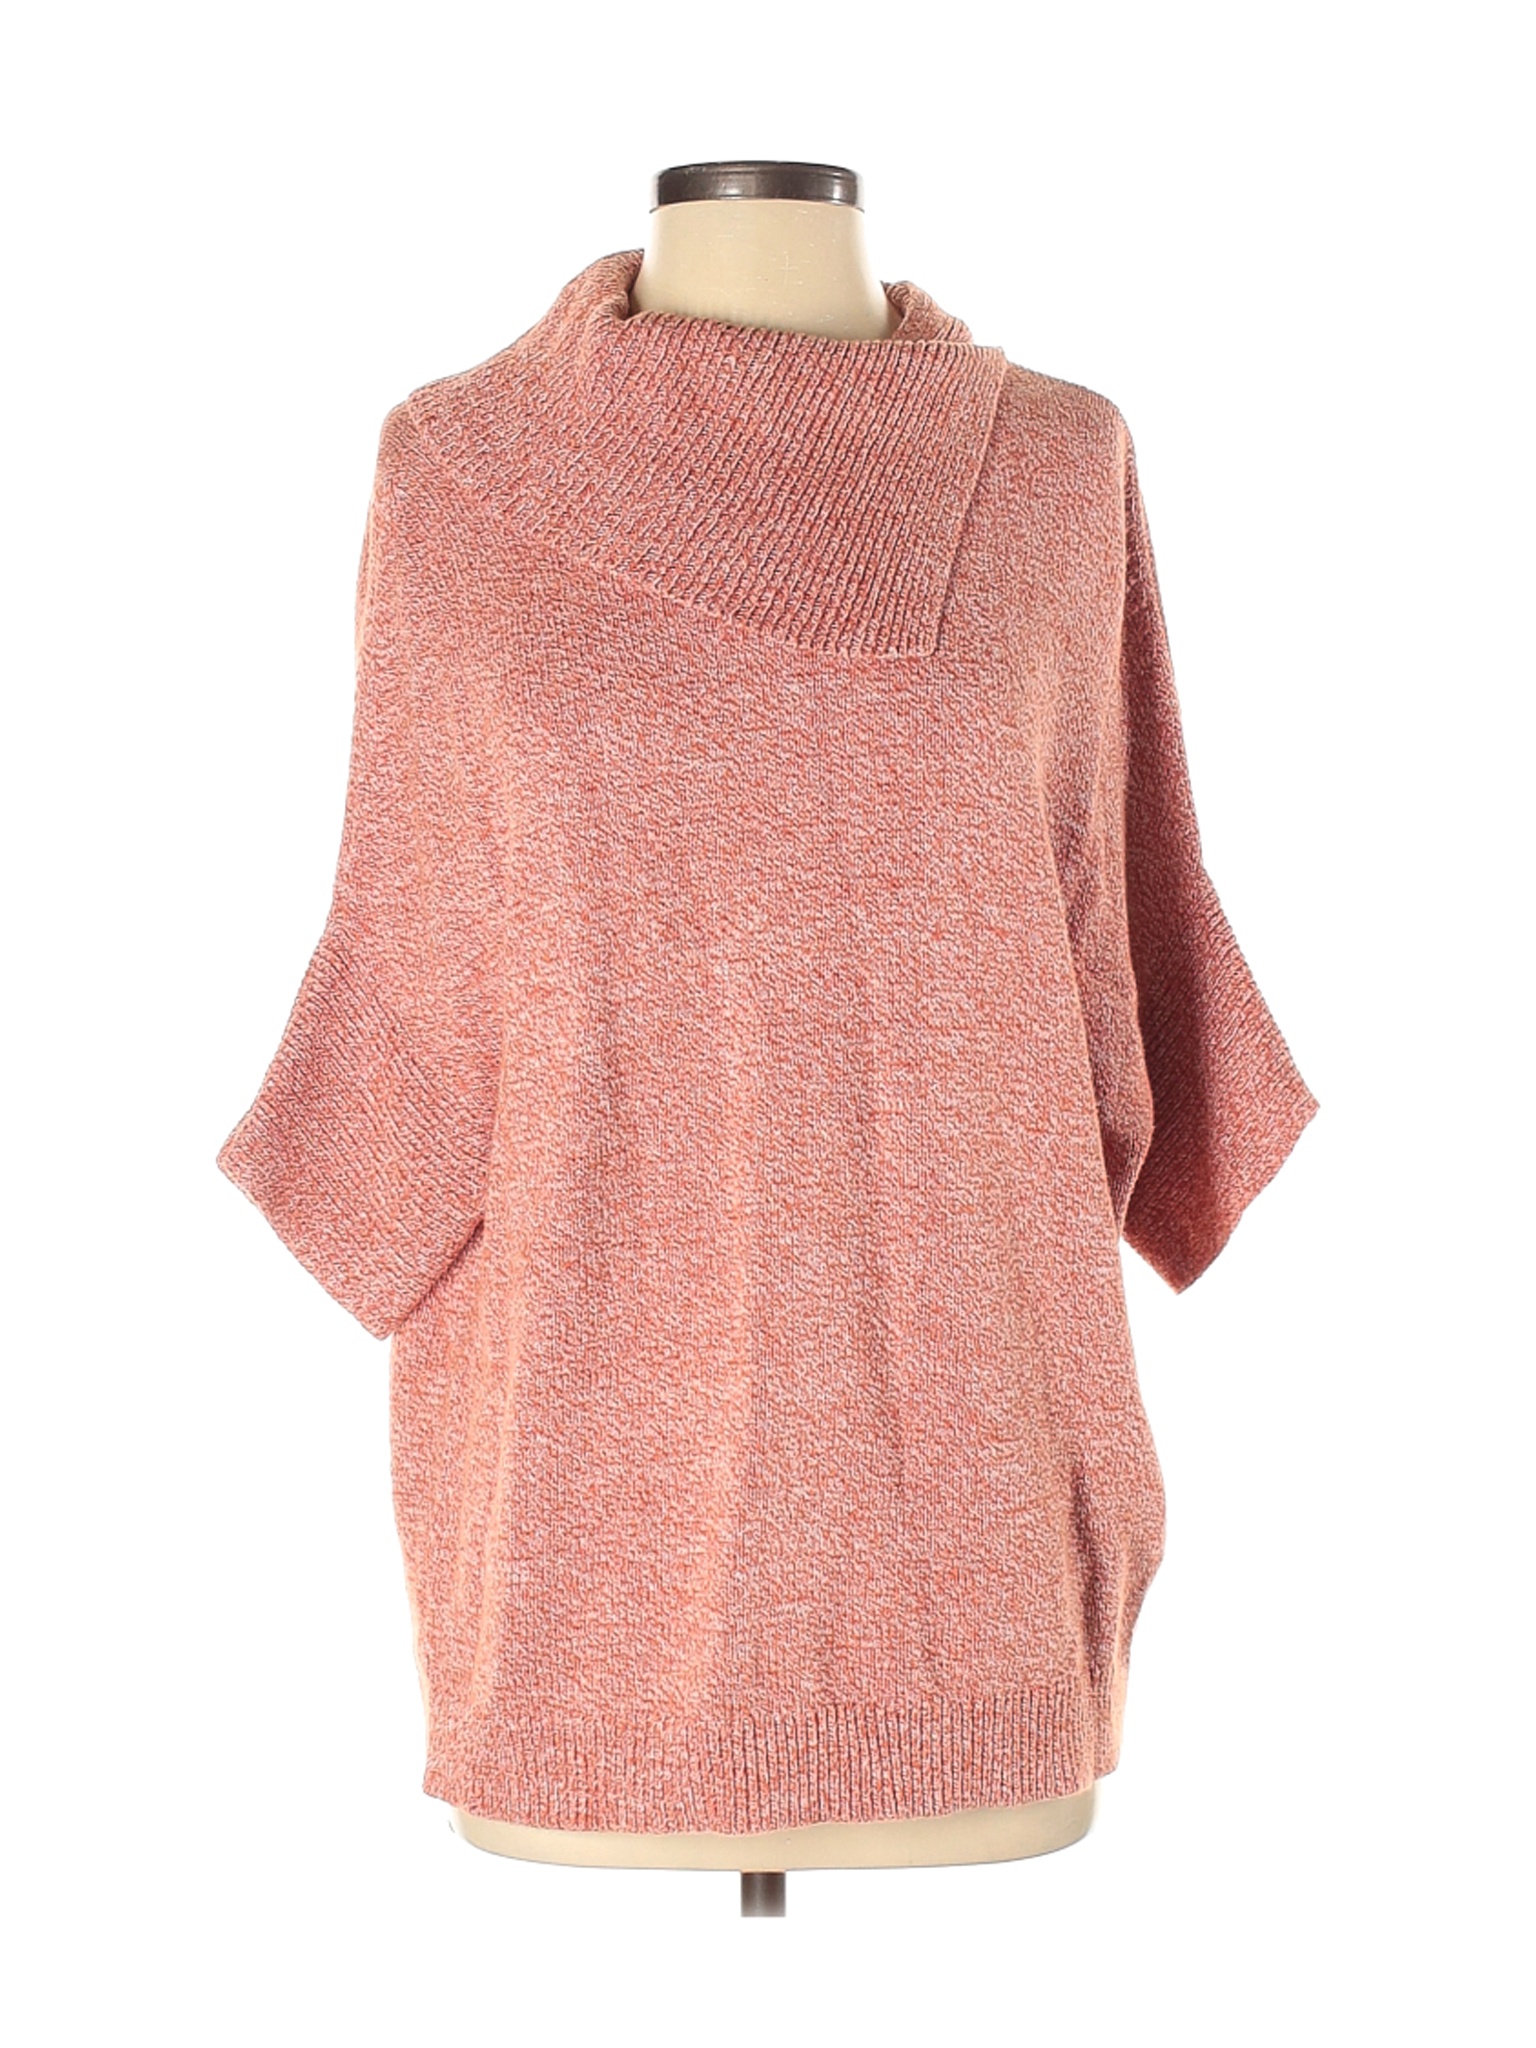 CAbi Women Pink Pullover Sweater XS | eBay